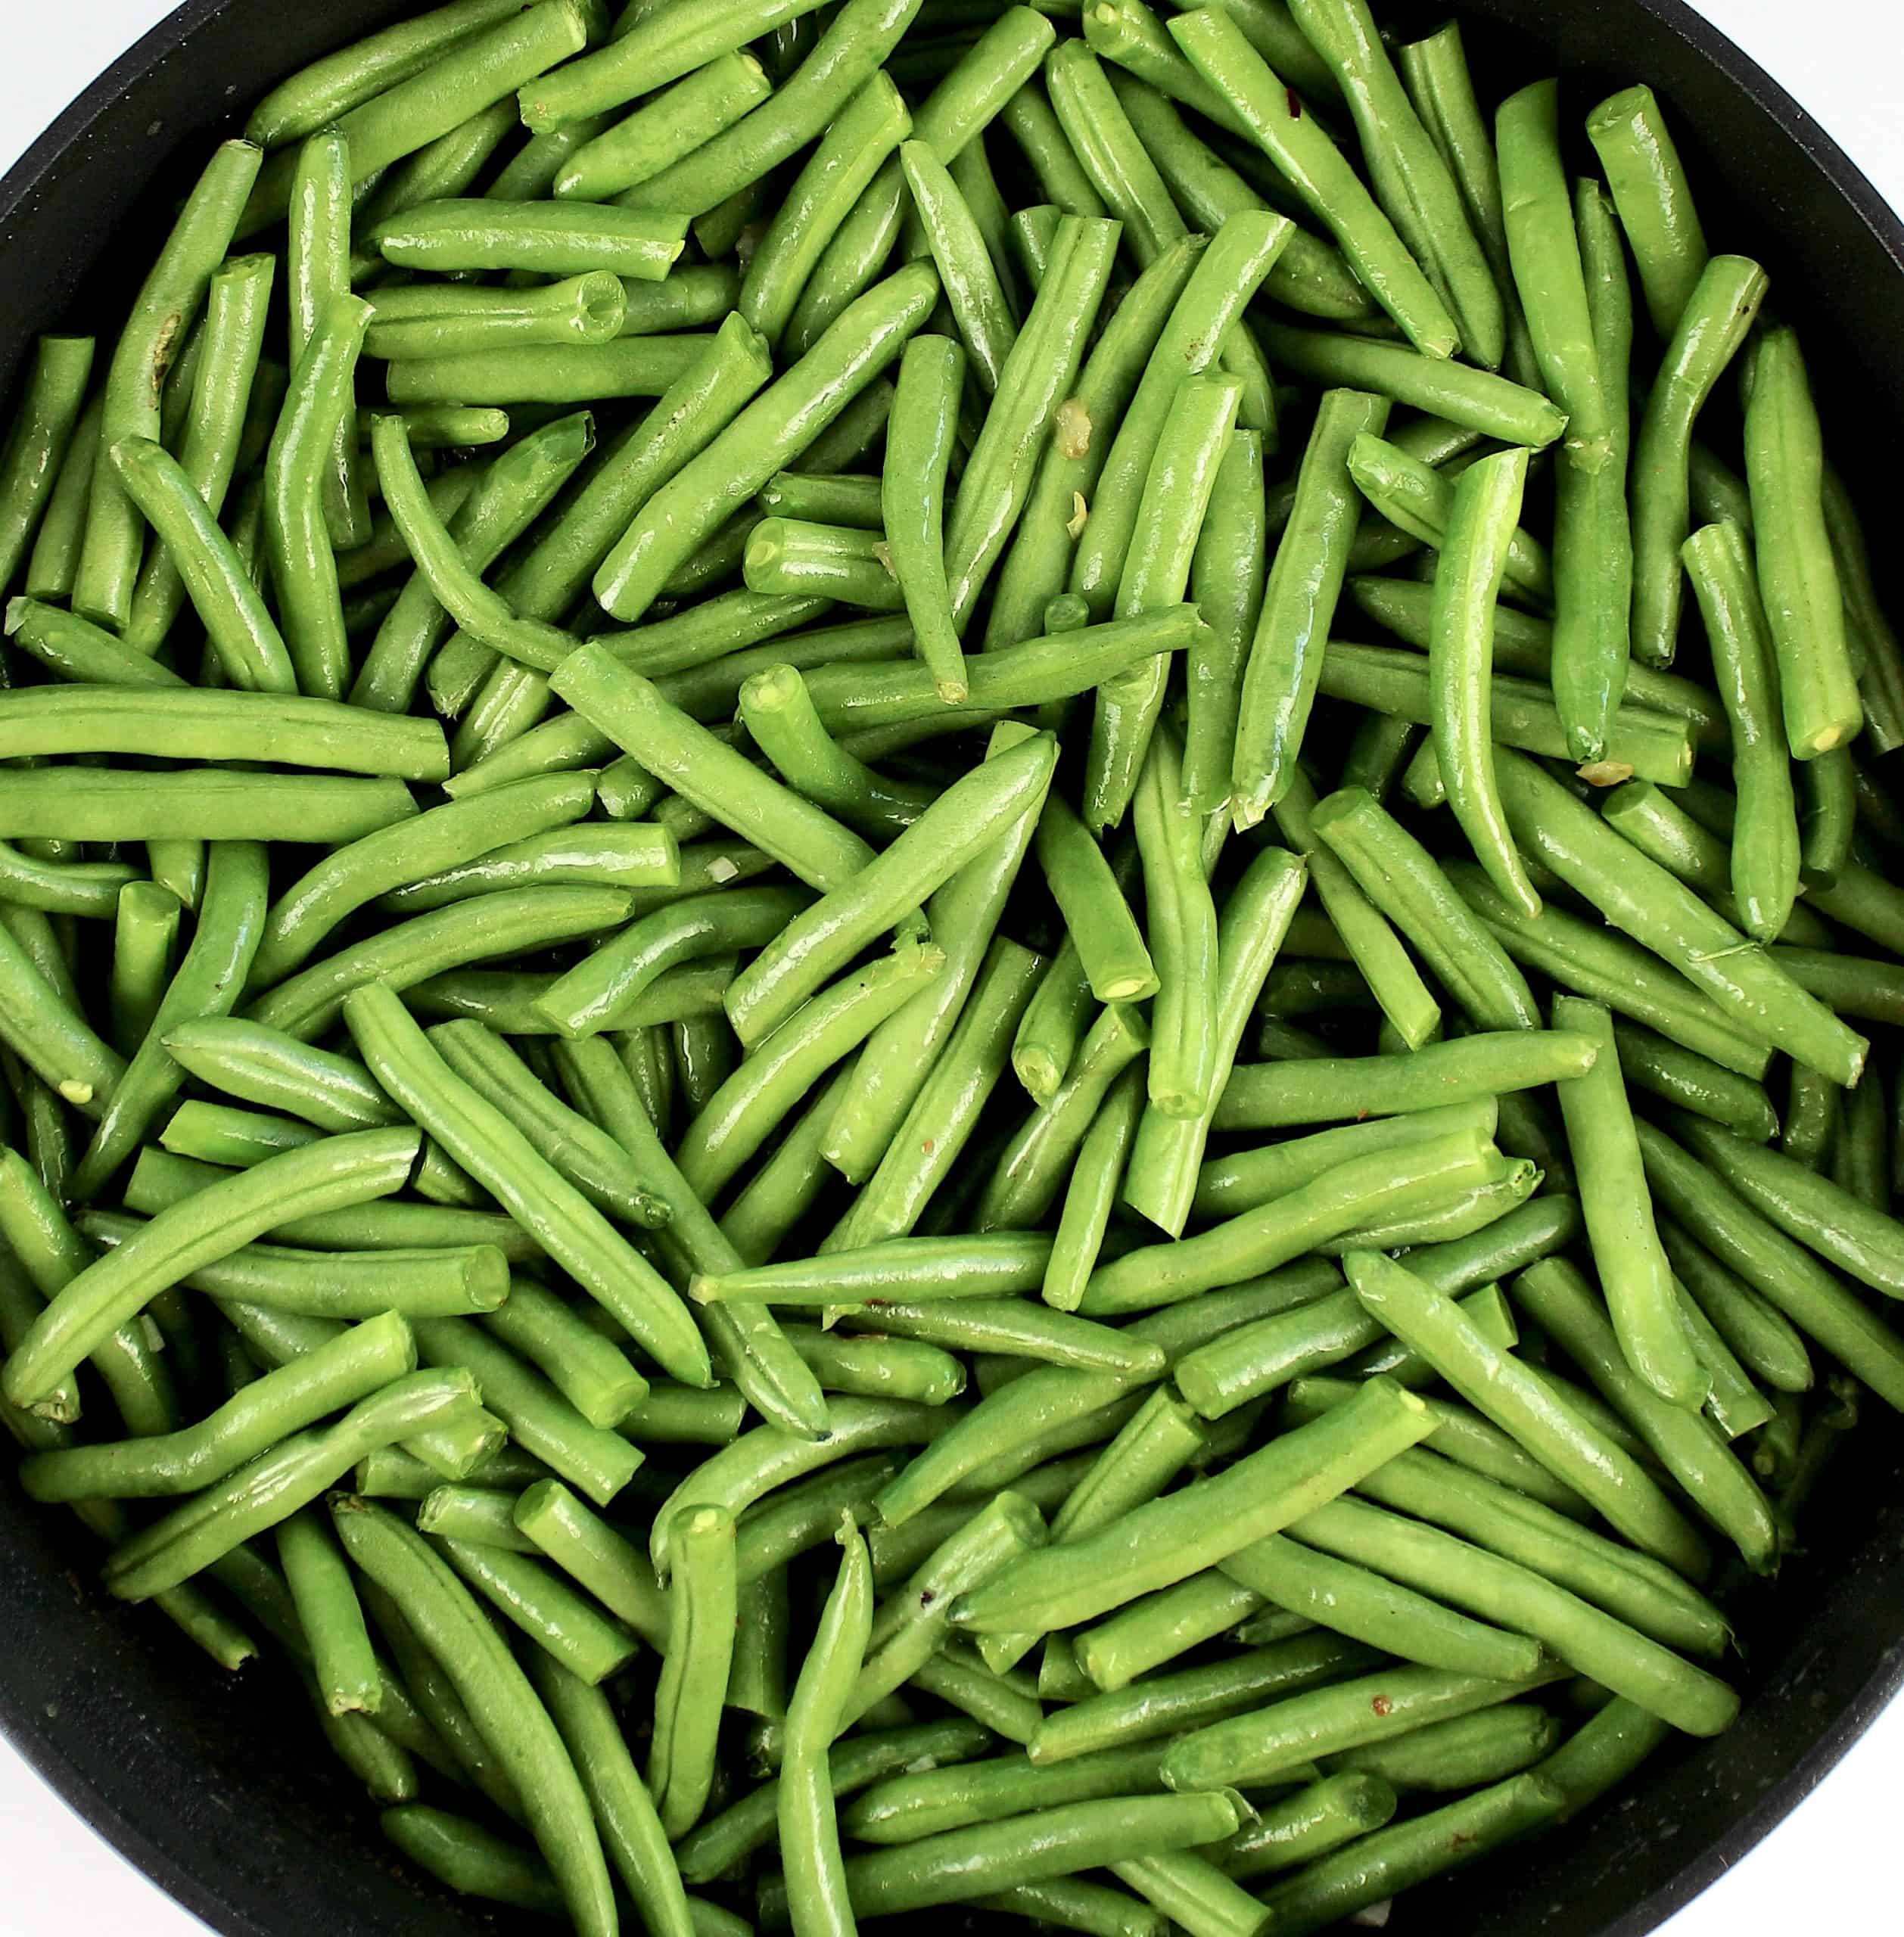 raw cut green beans in sklillet